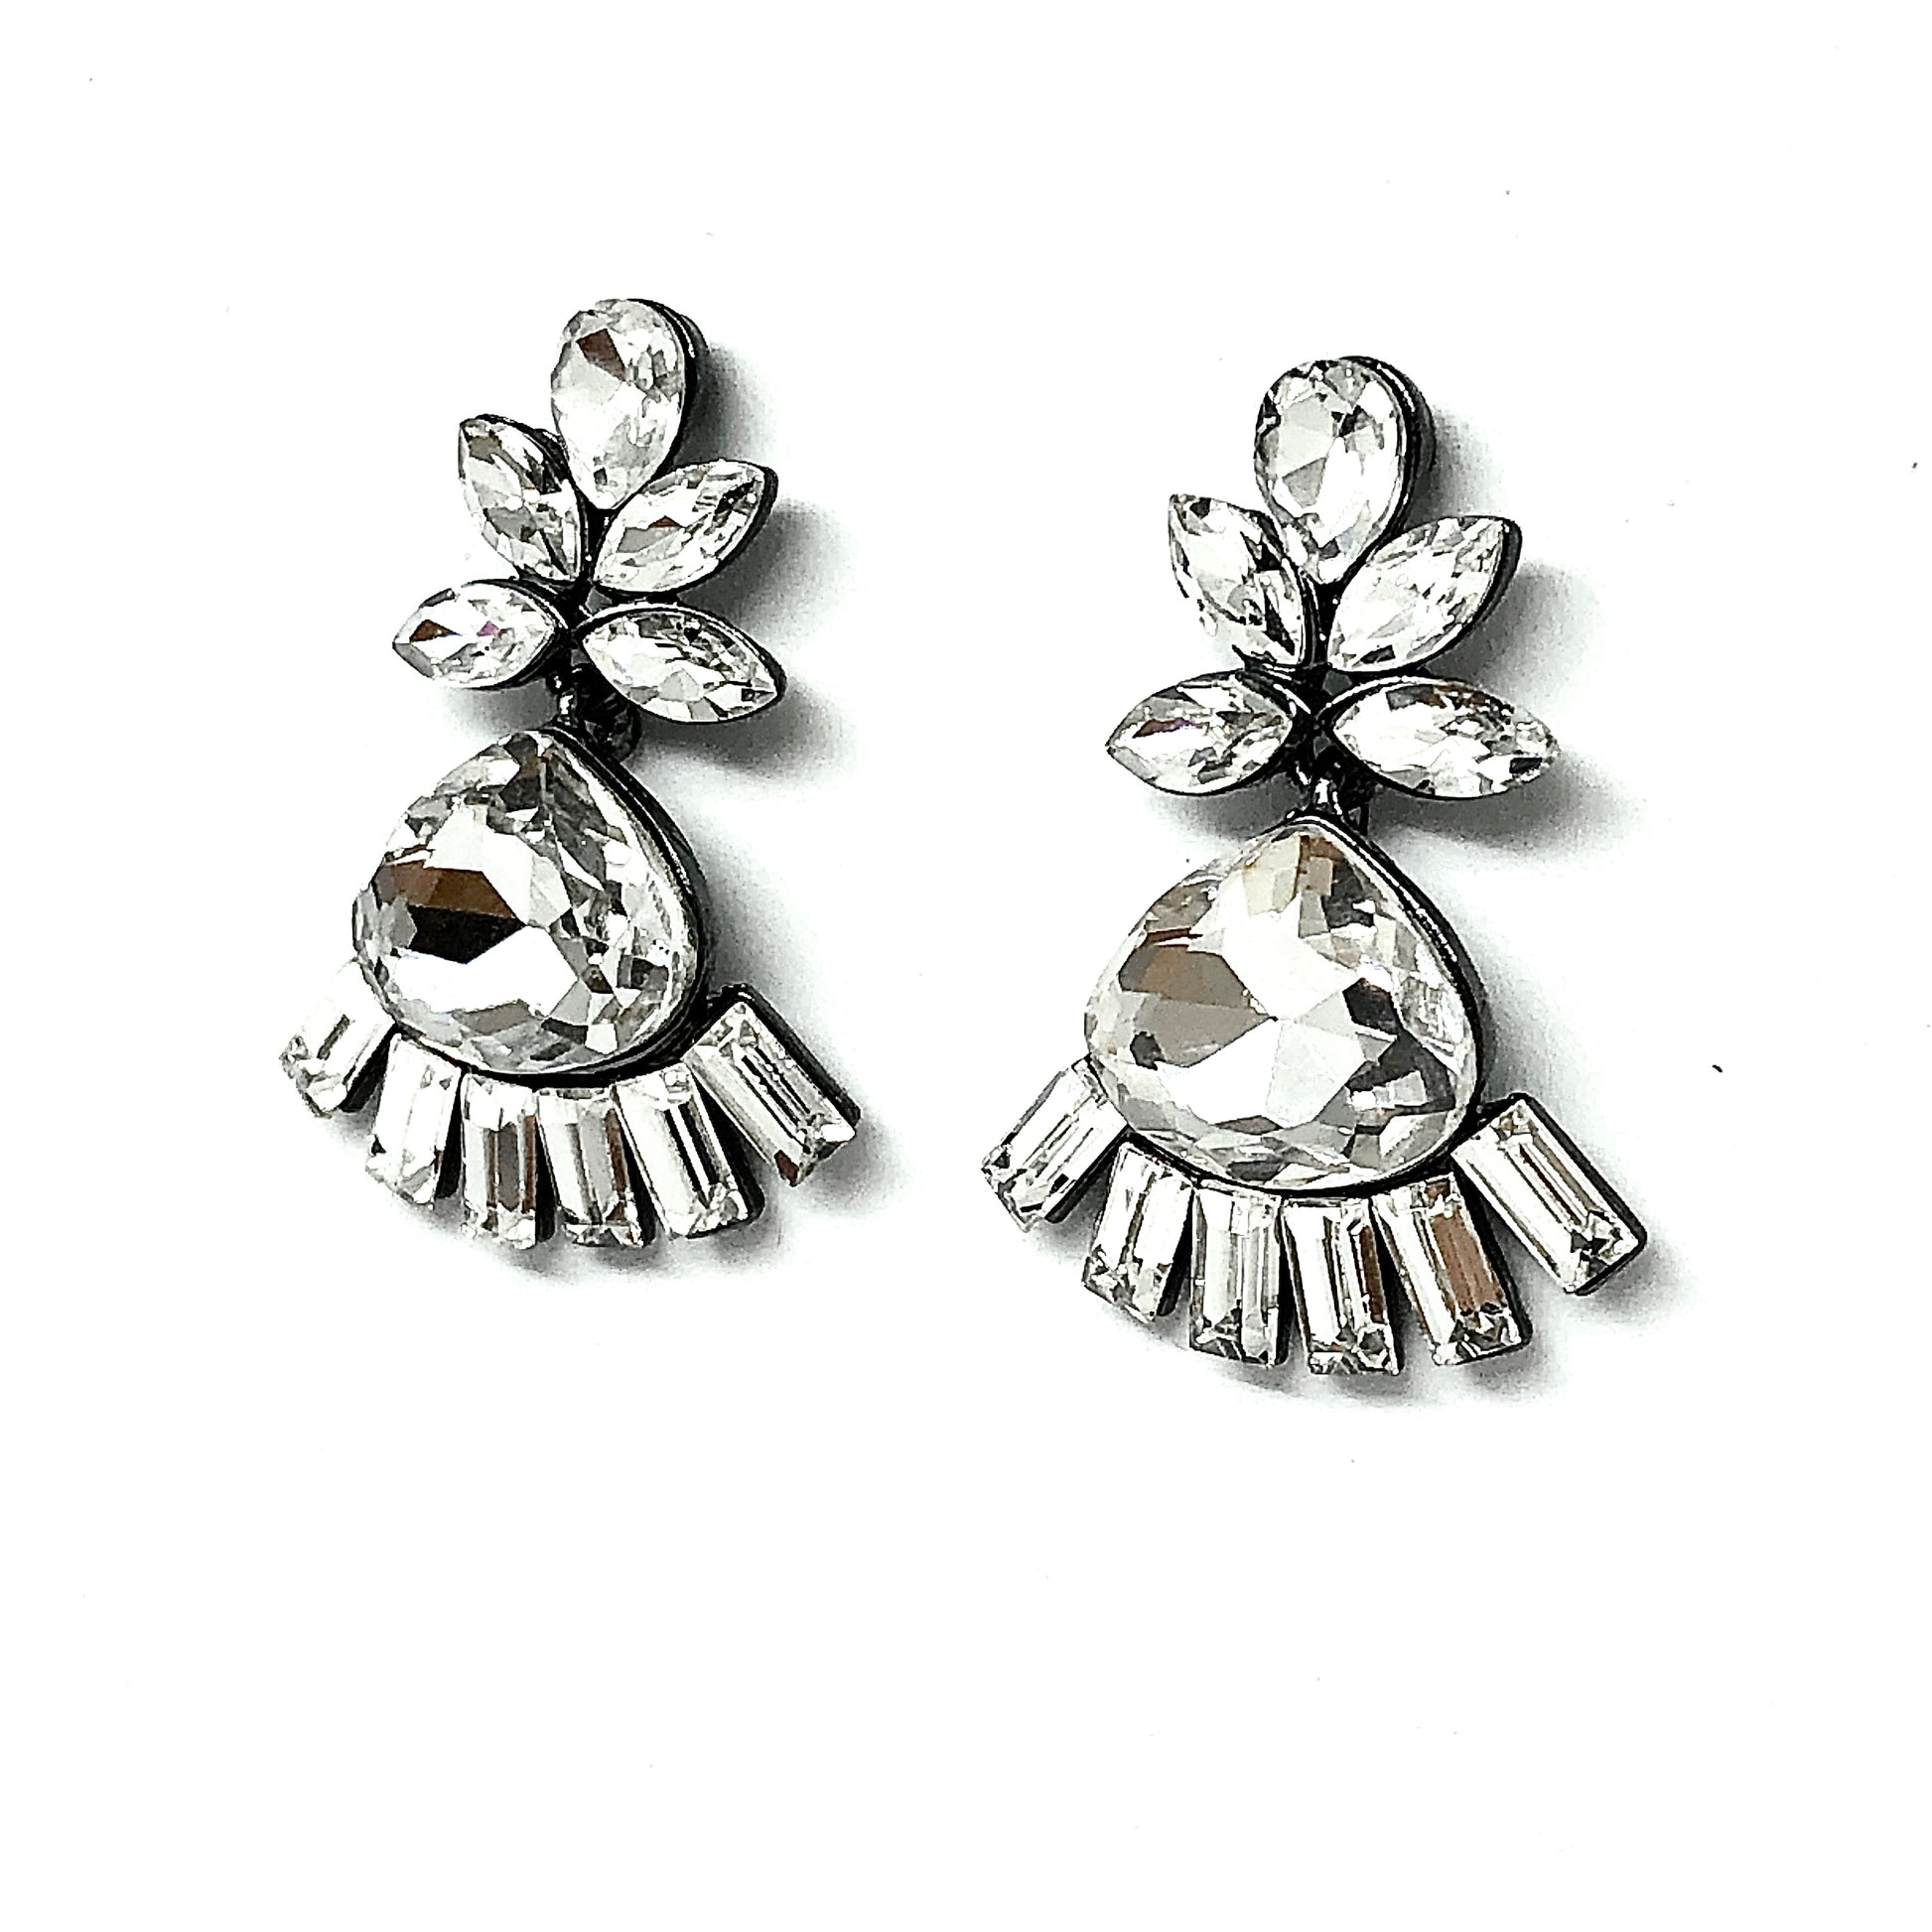 Discount Used Jewelry | Julia Earrings - Mirrored White Rhinestone Crystal Fancy Dangle Earrings online at Blingschlingers